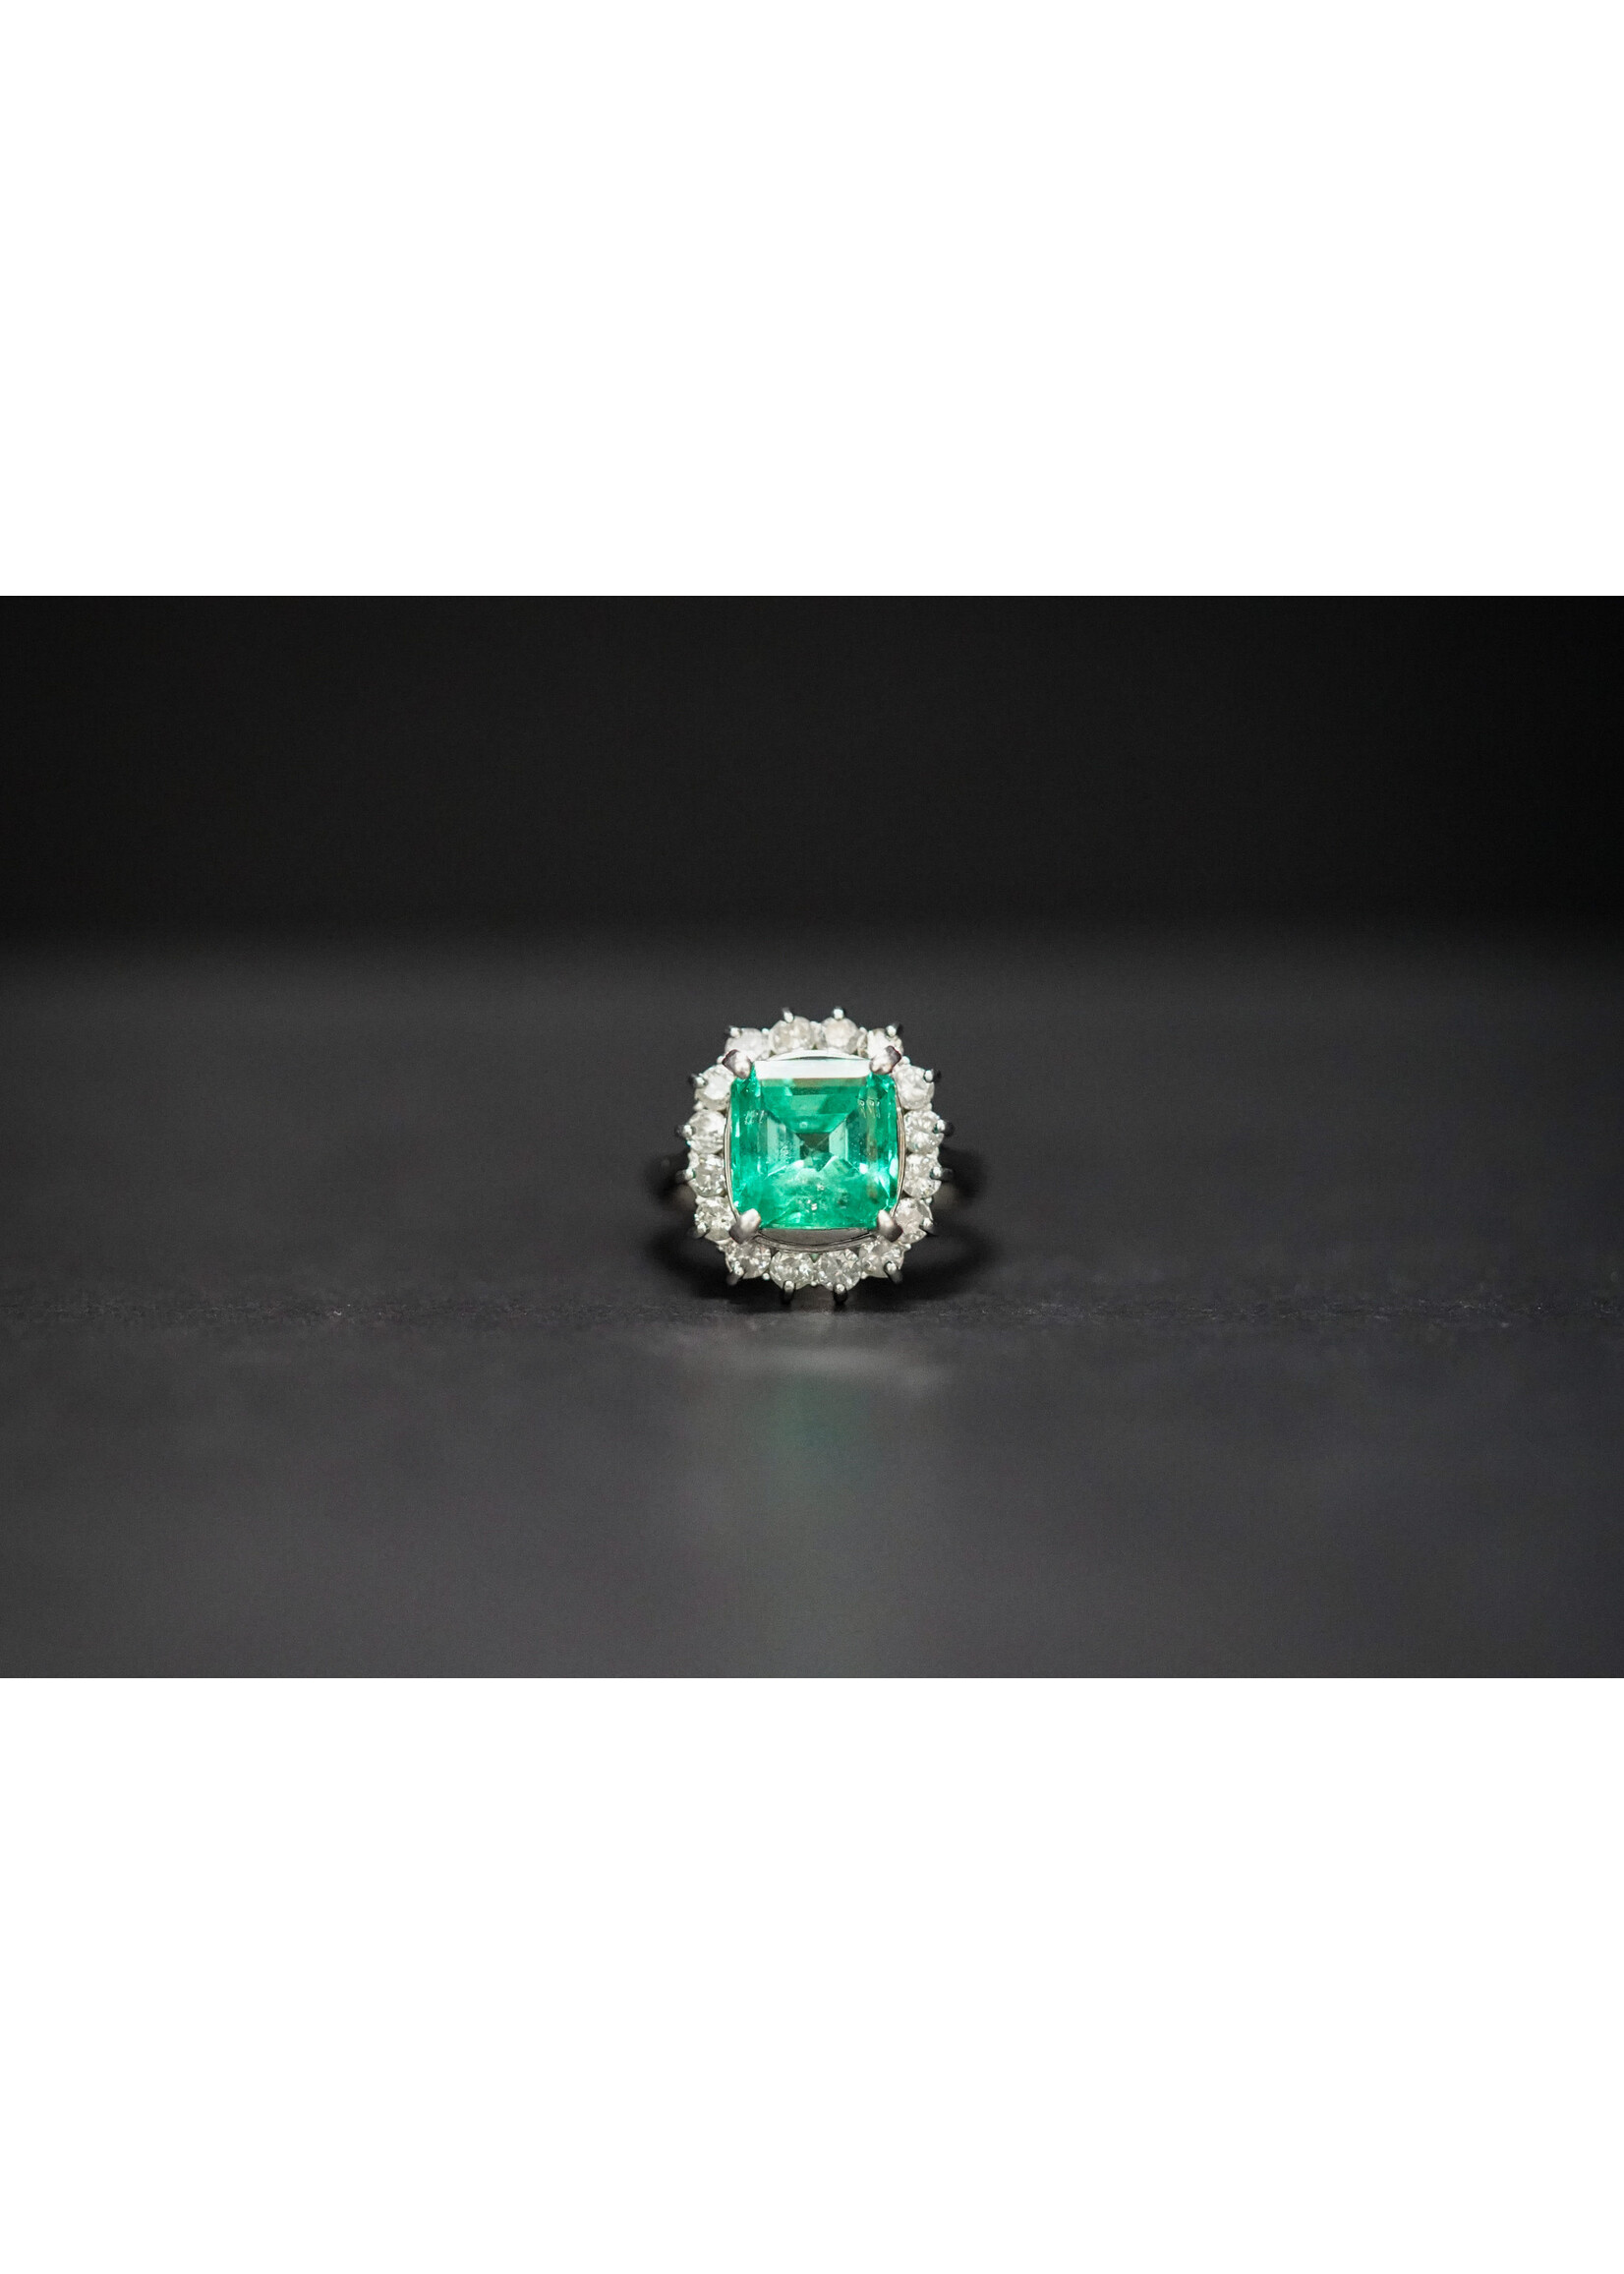 Platinum 10.4g 5.50ctw (4.50ctr) Columbian Emerald & Diamond Halo Ring (size 6.5)